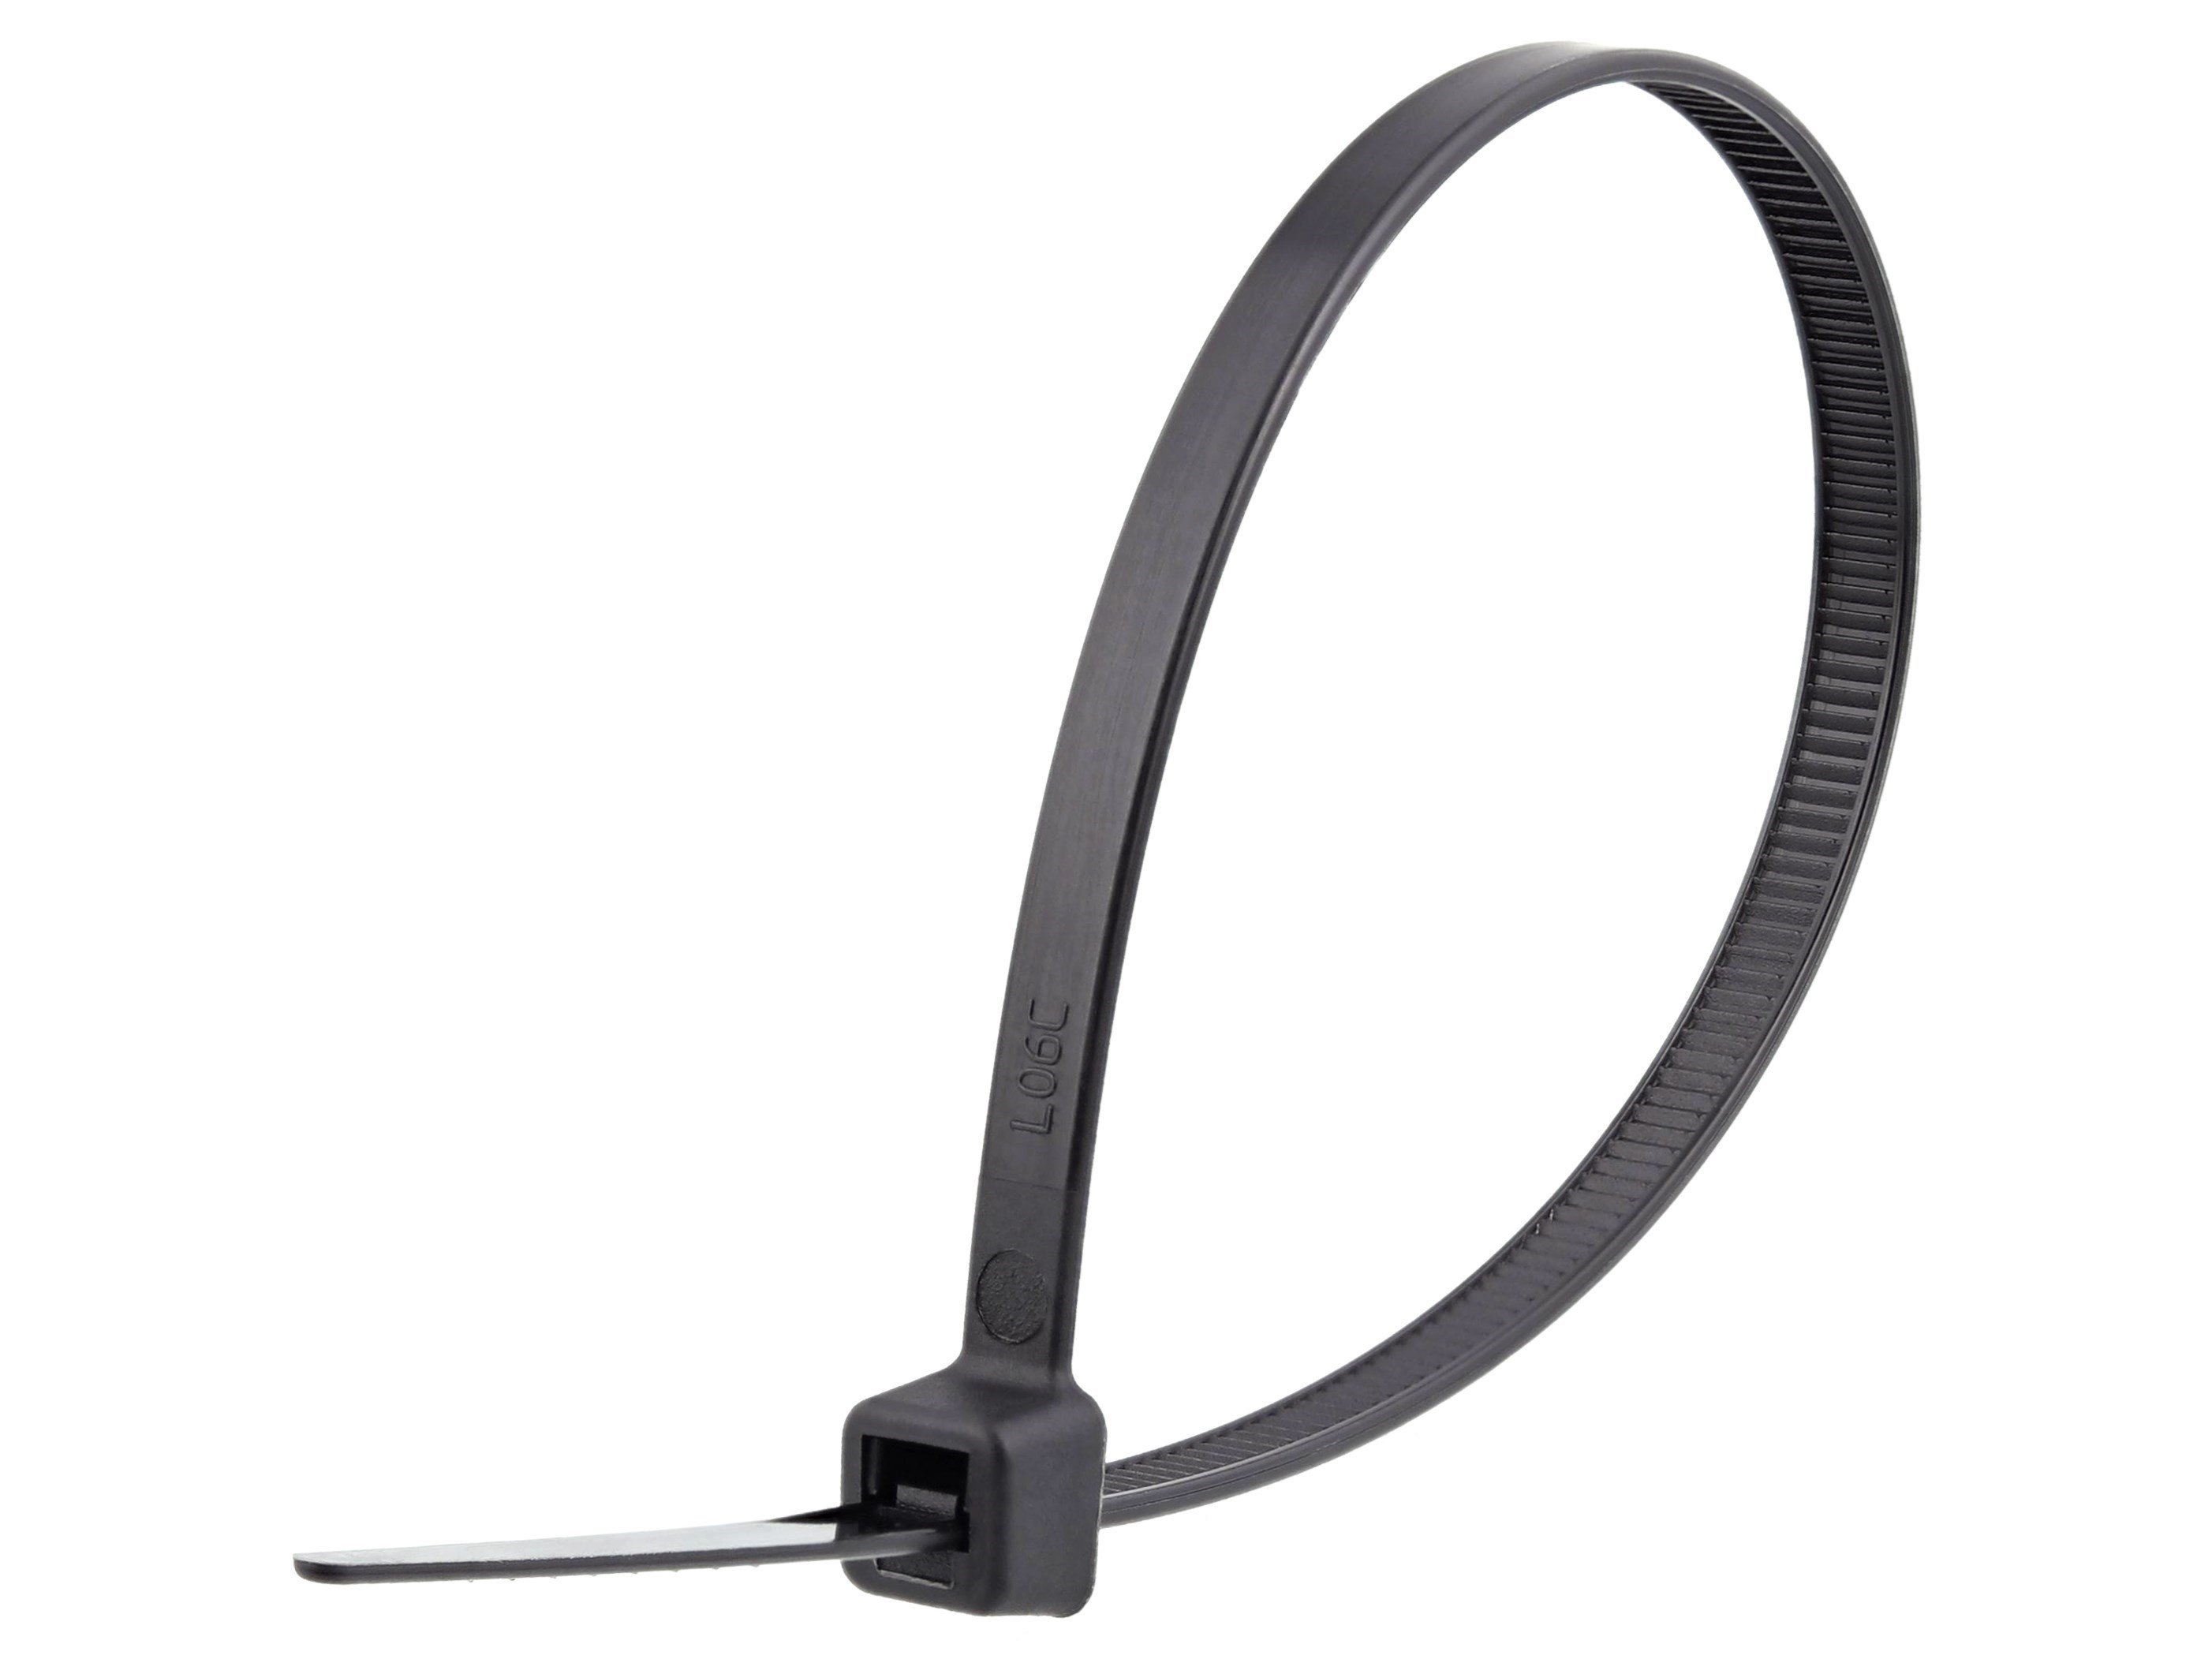 8-inch UV Resistant Black Multi-Purpose Cable Tie, 120-lb Tensile Strength,  1000-Pack